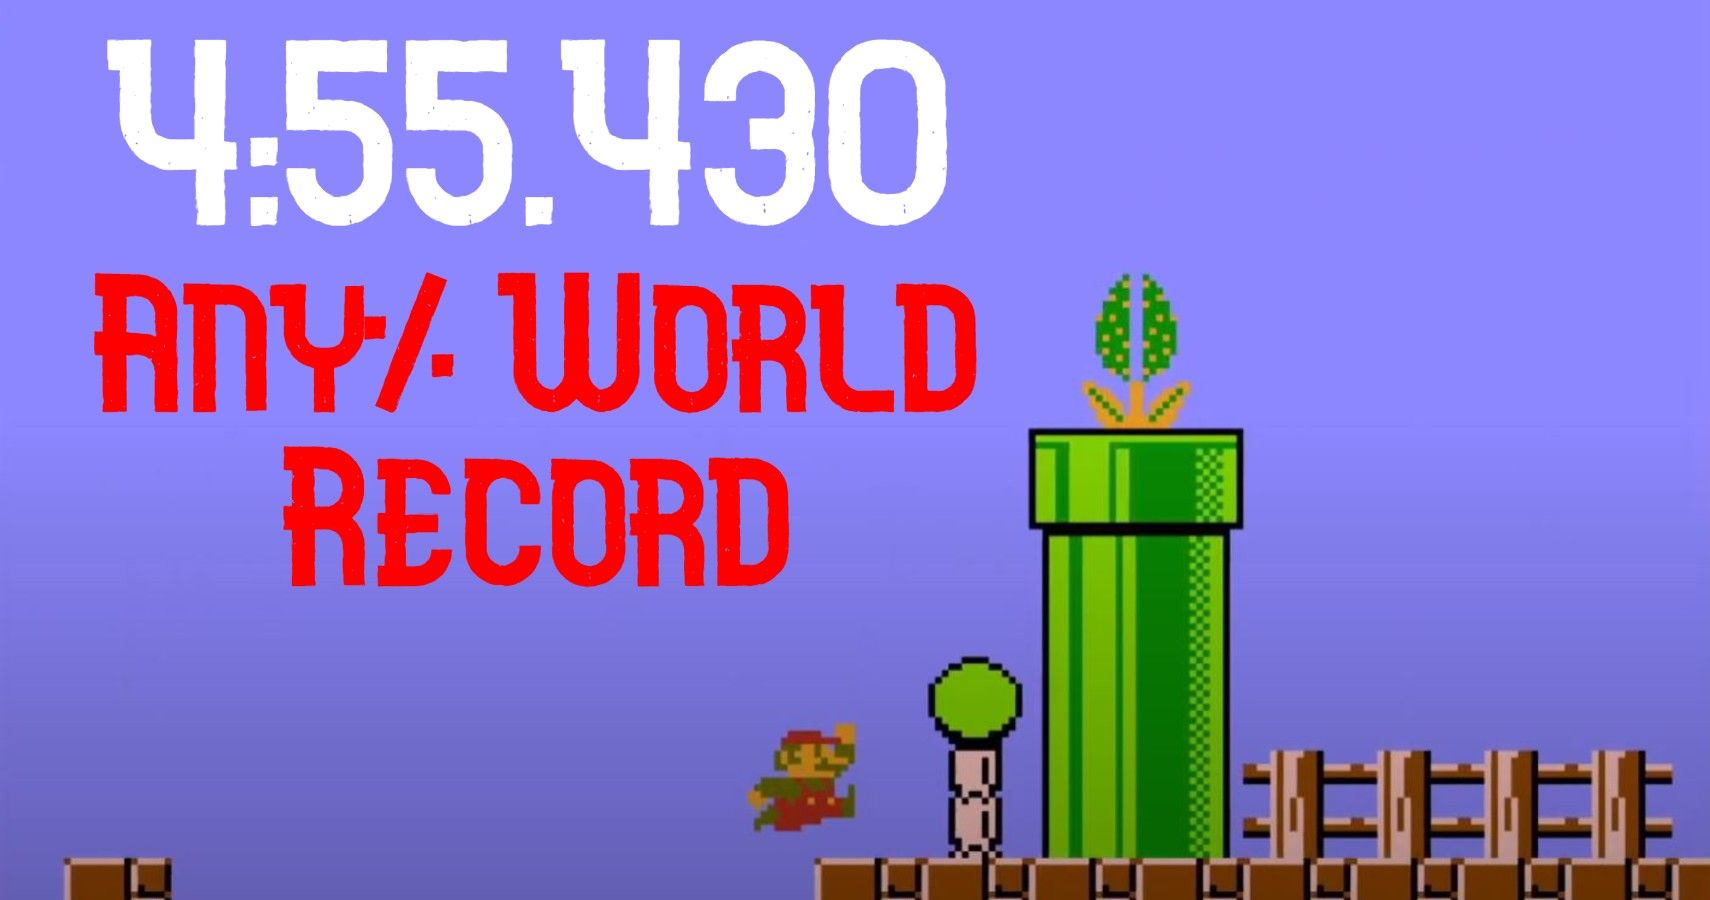 super mario bros. world record